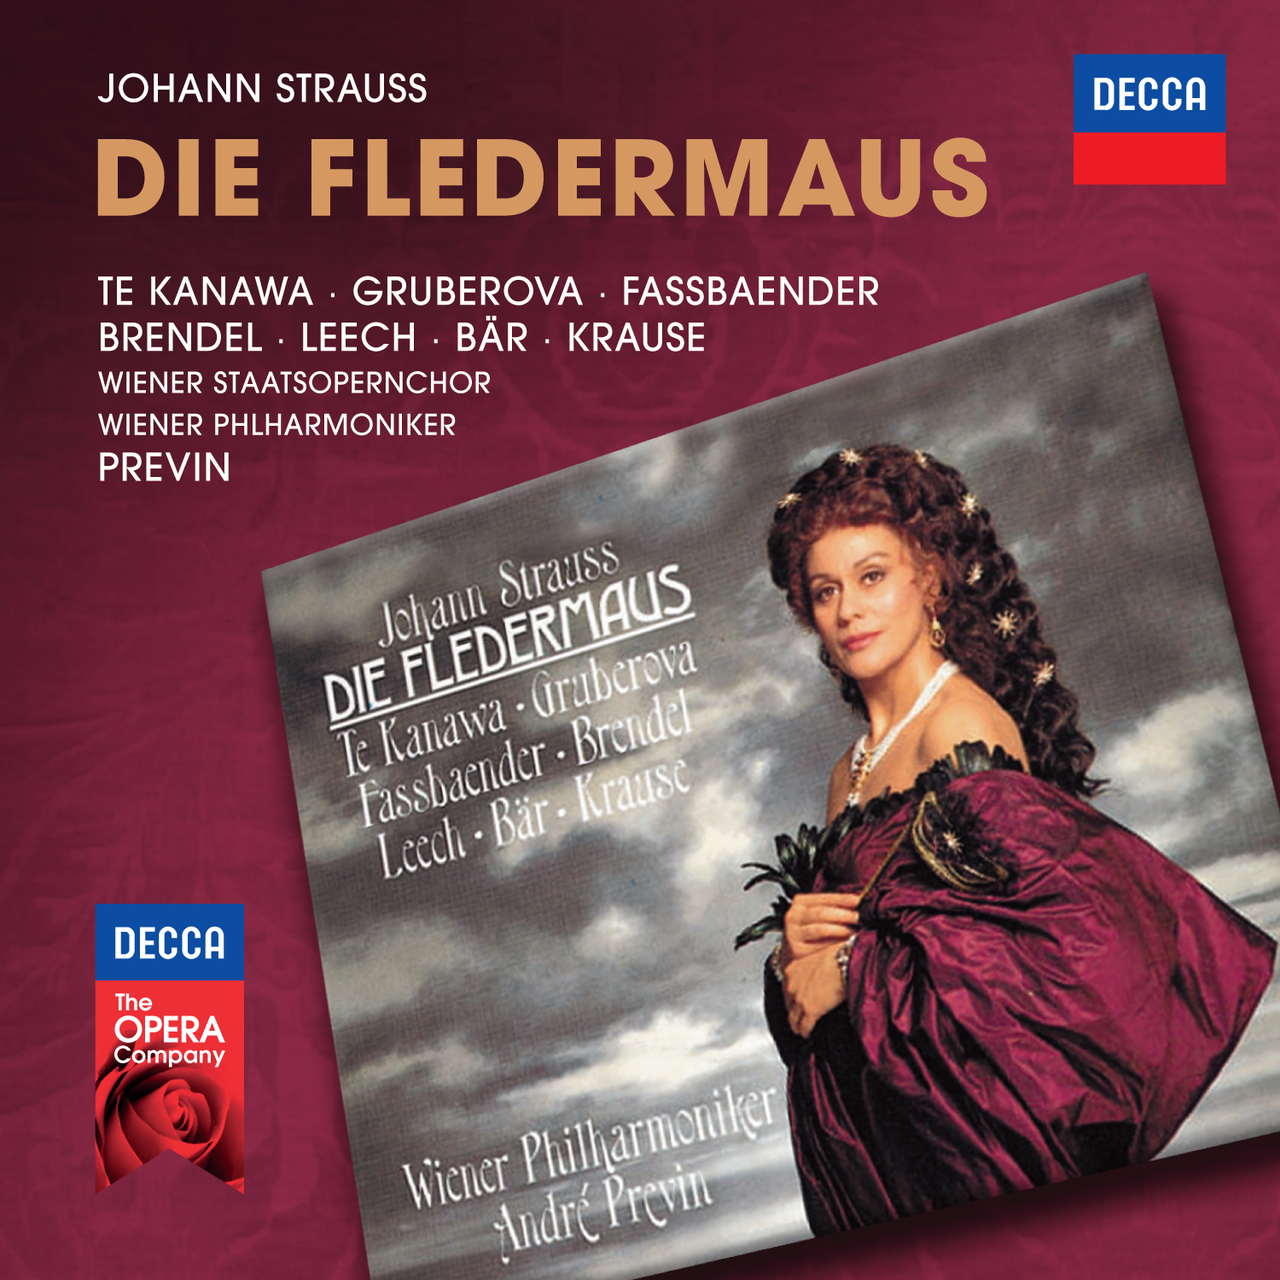 André Previn's 1991 recording of "Fledermaus" starring Kiri te Kanawa. (Photo: Decca)